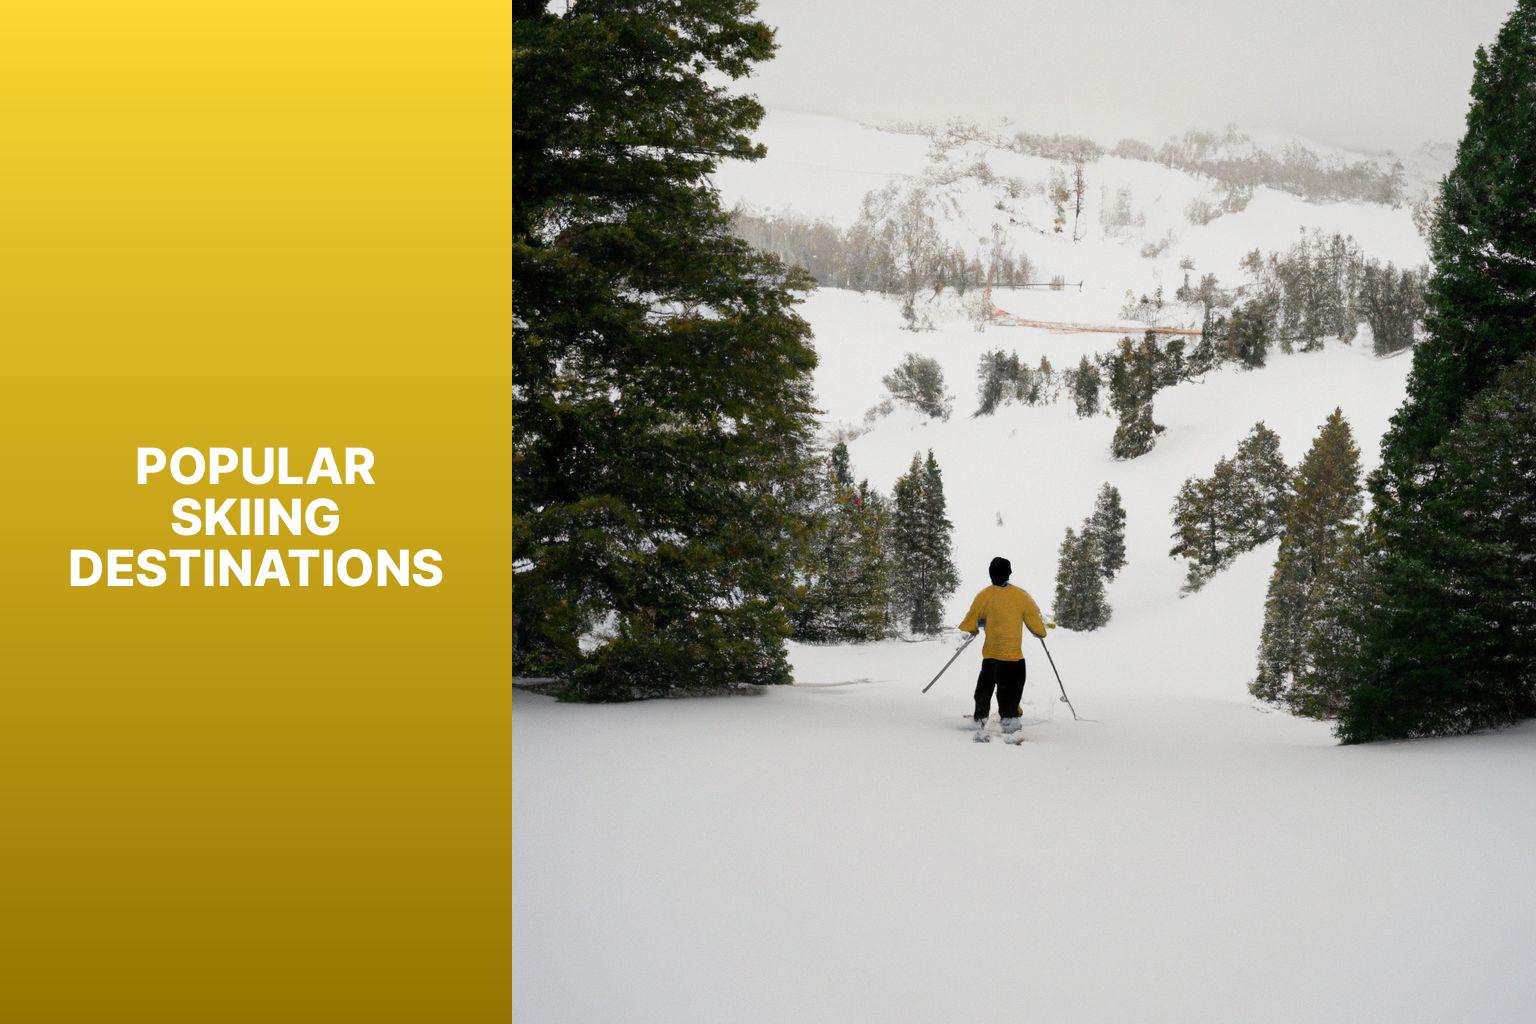 Popular Skiing Destinations - Winter Destinations for Men: Skiing, Snowboarding, and Ice Adventures 